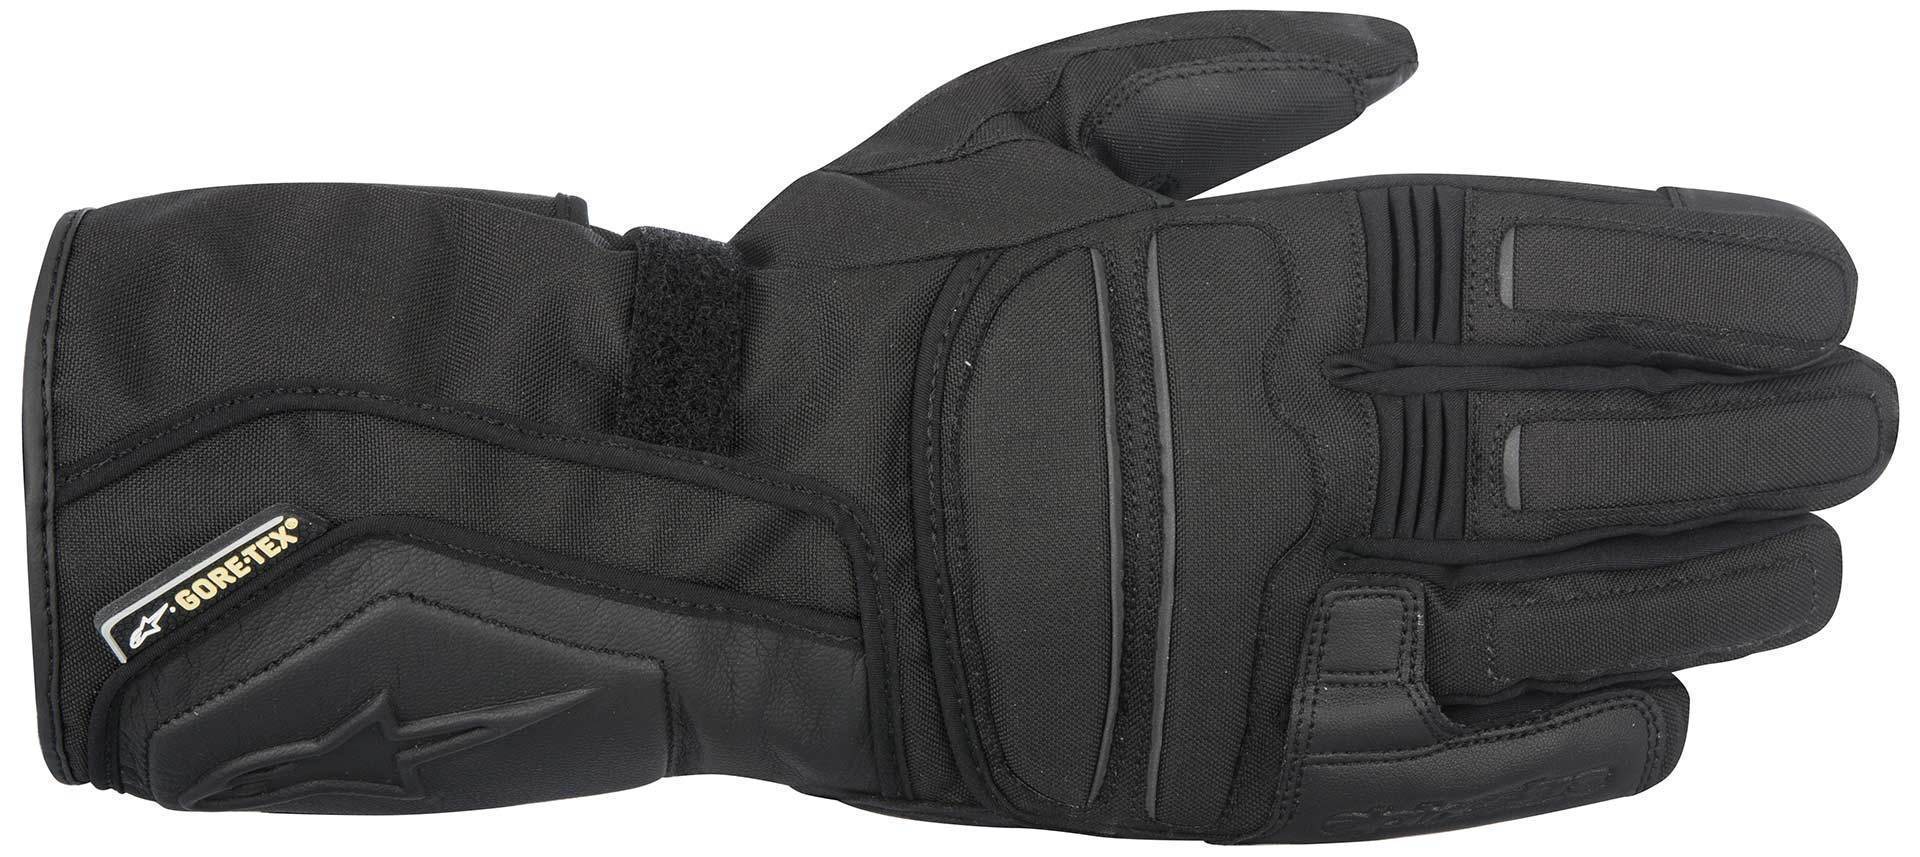 Alpinestars Wr-V Gore-Tex Waterproof Gloves 2016  - Black